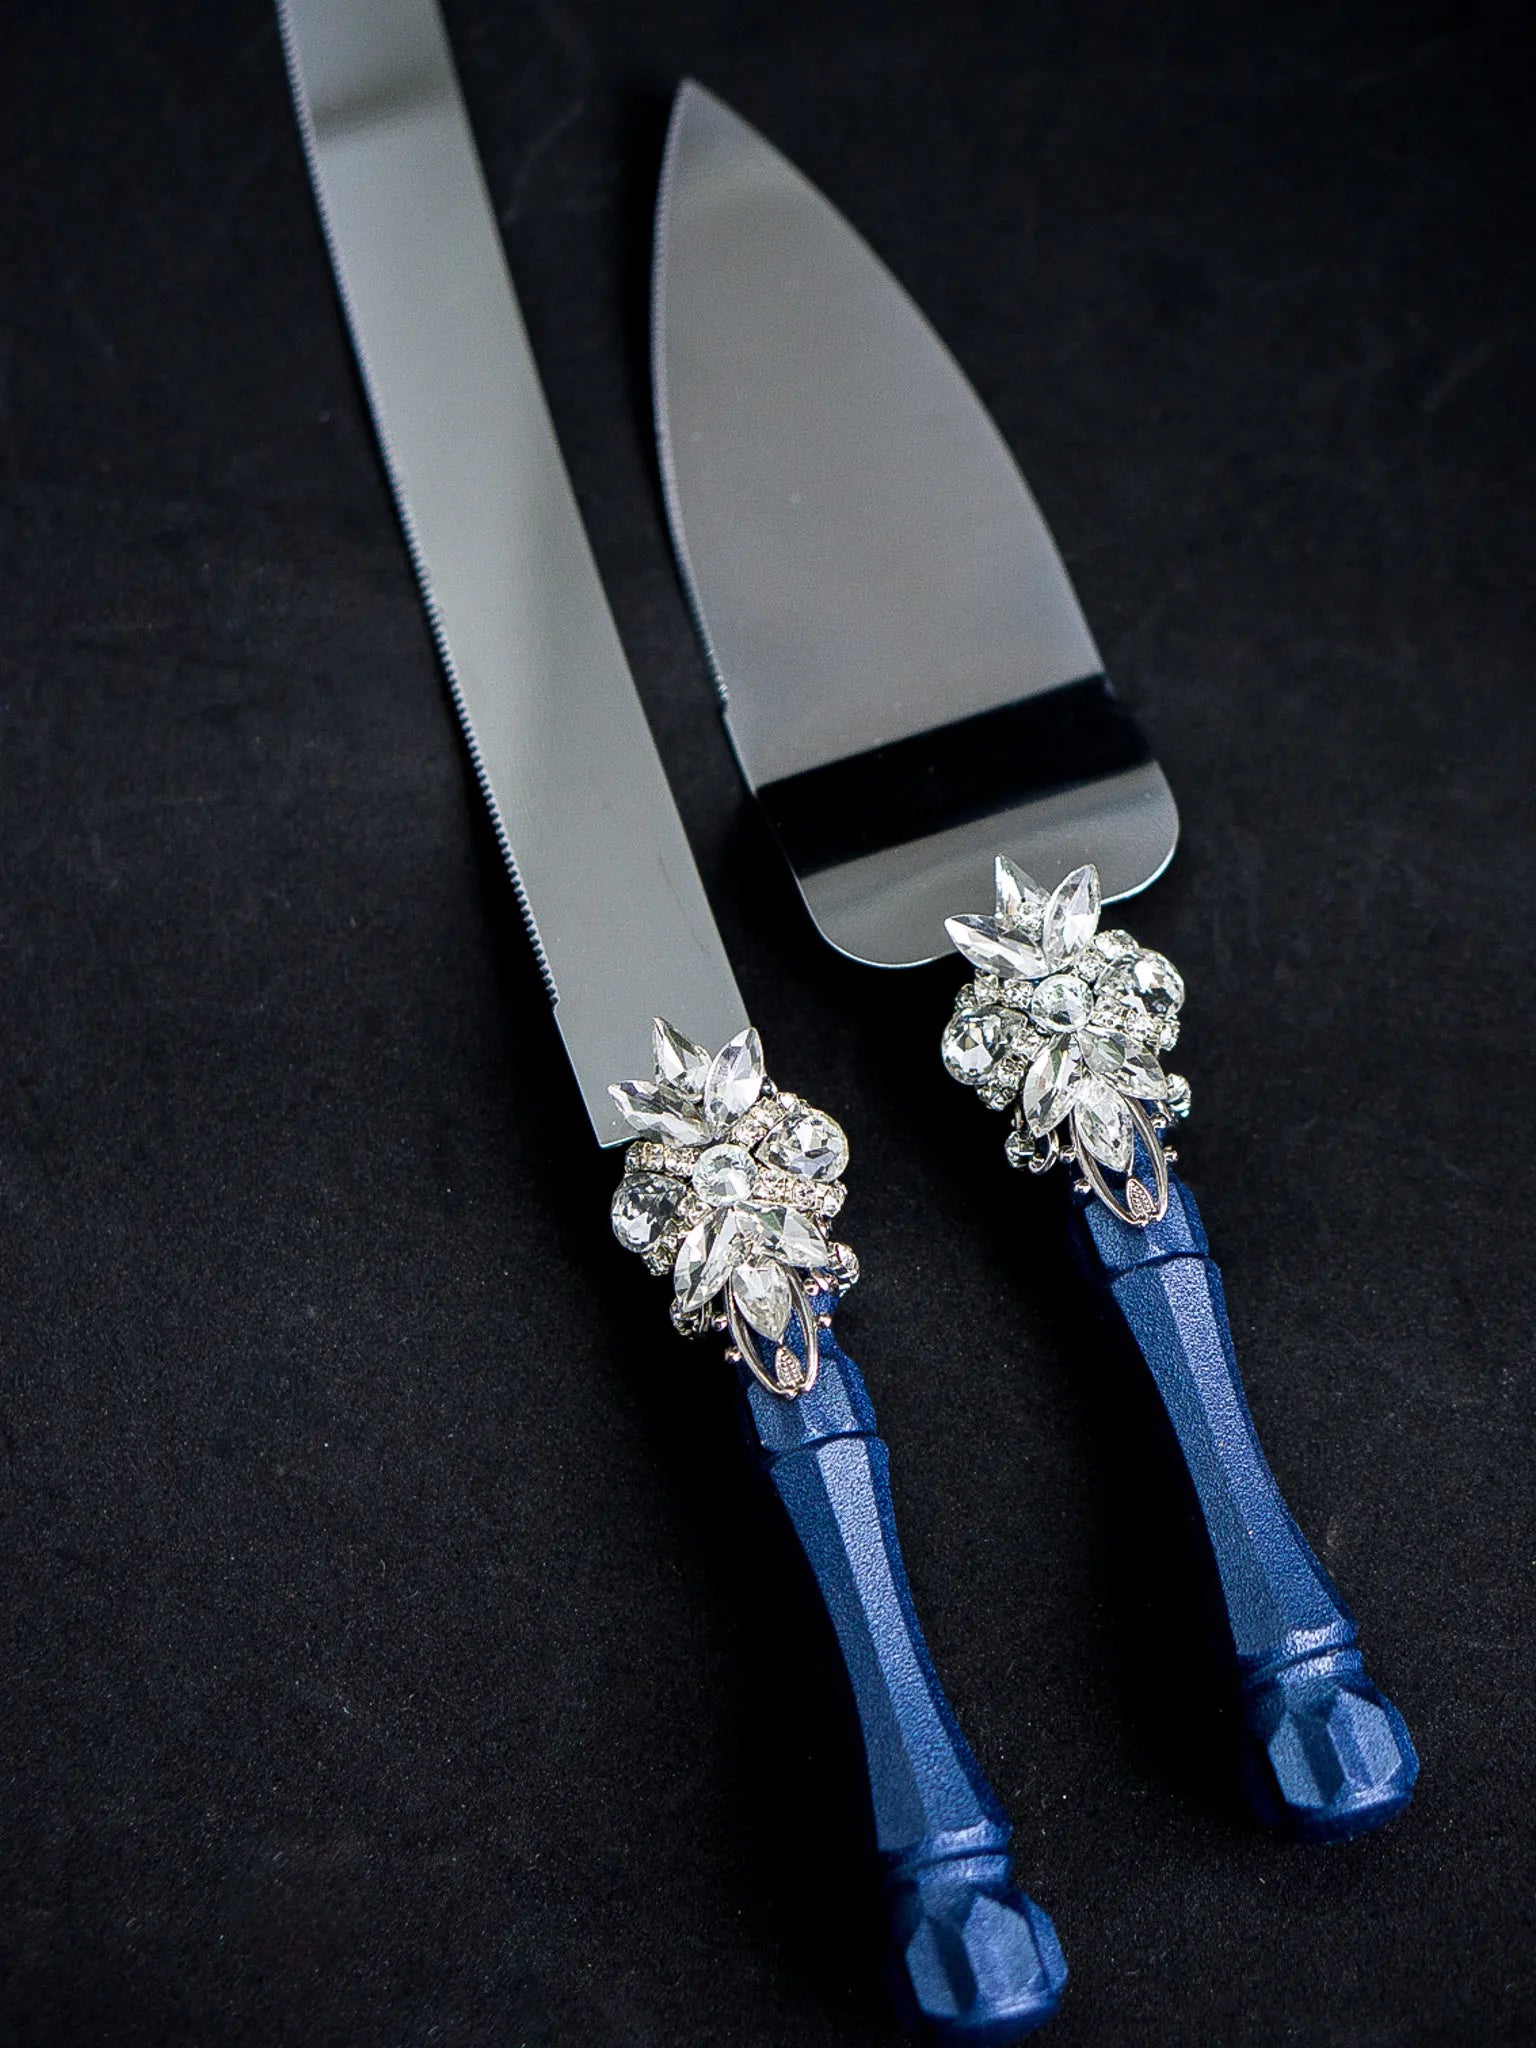 Navy blue metallic cake knife and server